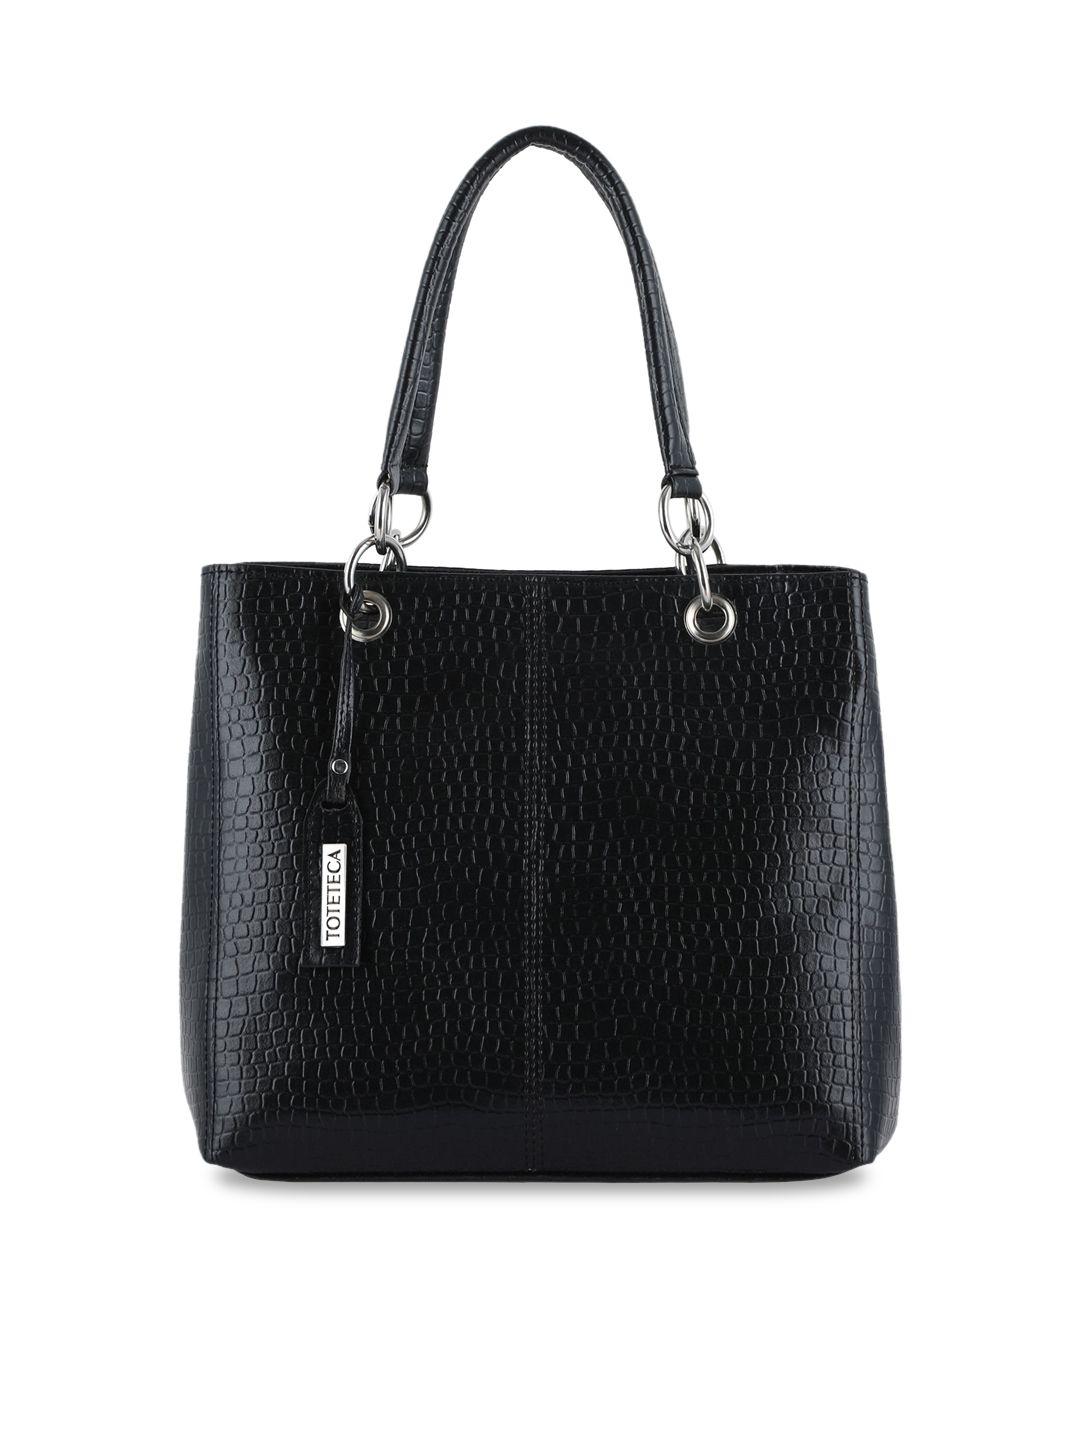 toteteca black animal textured structured handheld bag